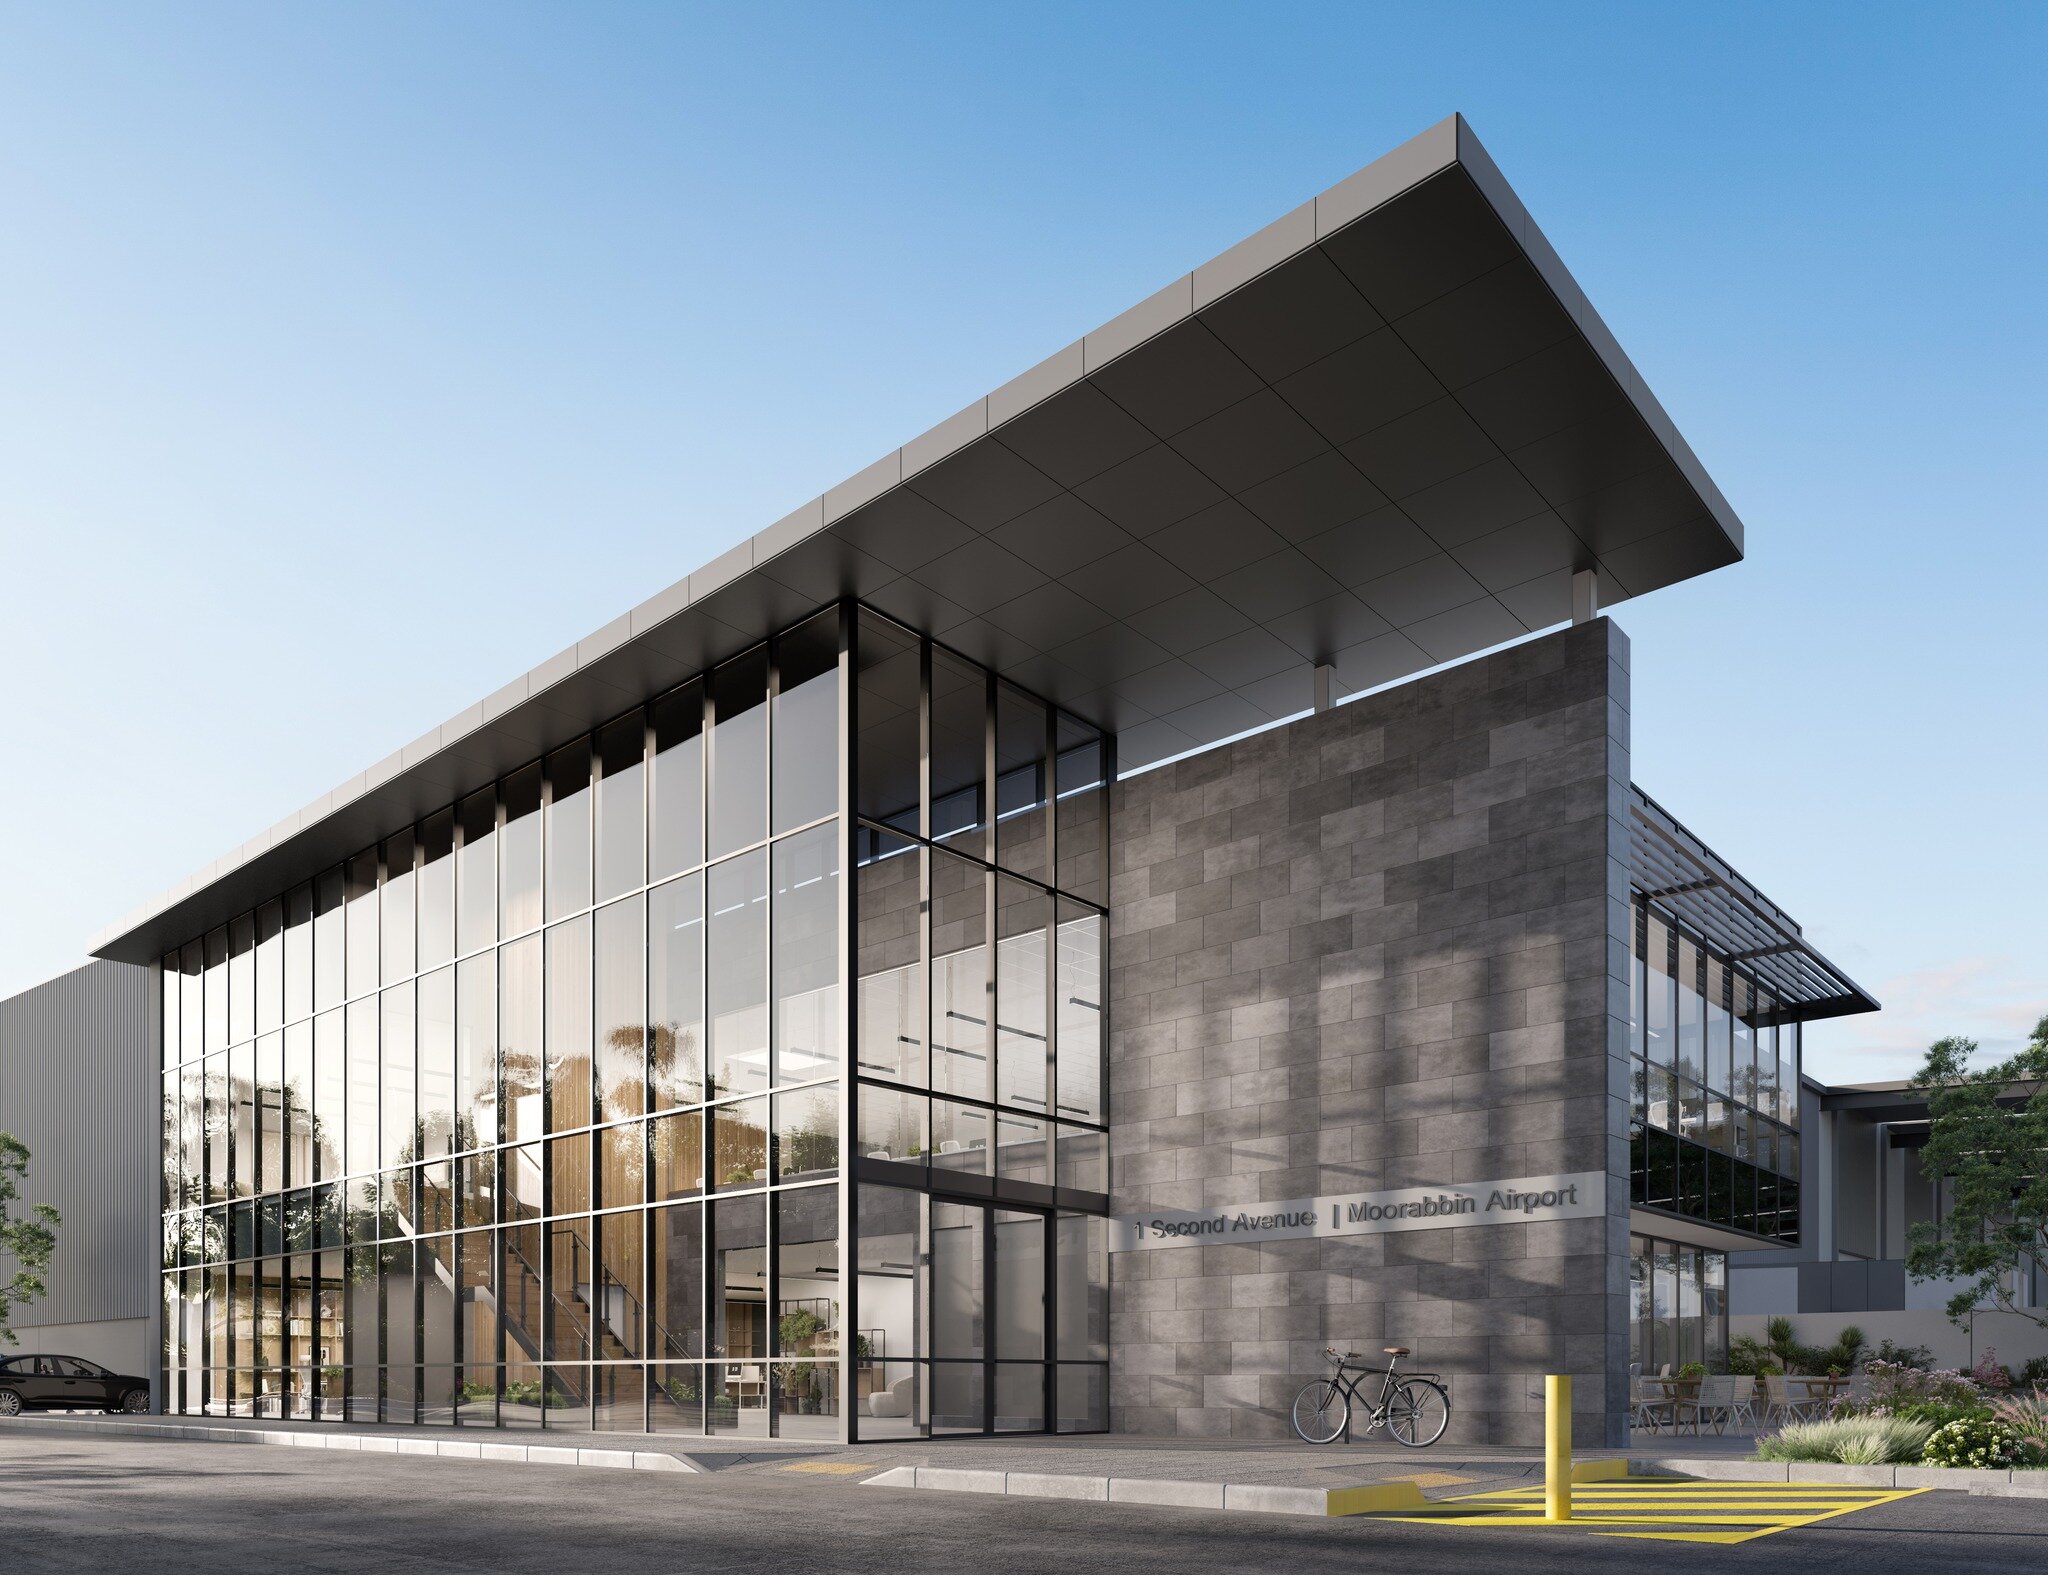 Office Building in Moorabbin, Australia.
.
.
.

▪️ Artist: @_katarinadjordjevic
▪️ Software: 3D Max, Corona Renderer, Photoshop
▪️ Year: 2023.
.
.
.
#cinemagraph #architecture #design #interior #officedesign #3dsmax #coronarender #cgtop #adobe #photo